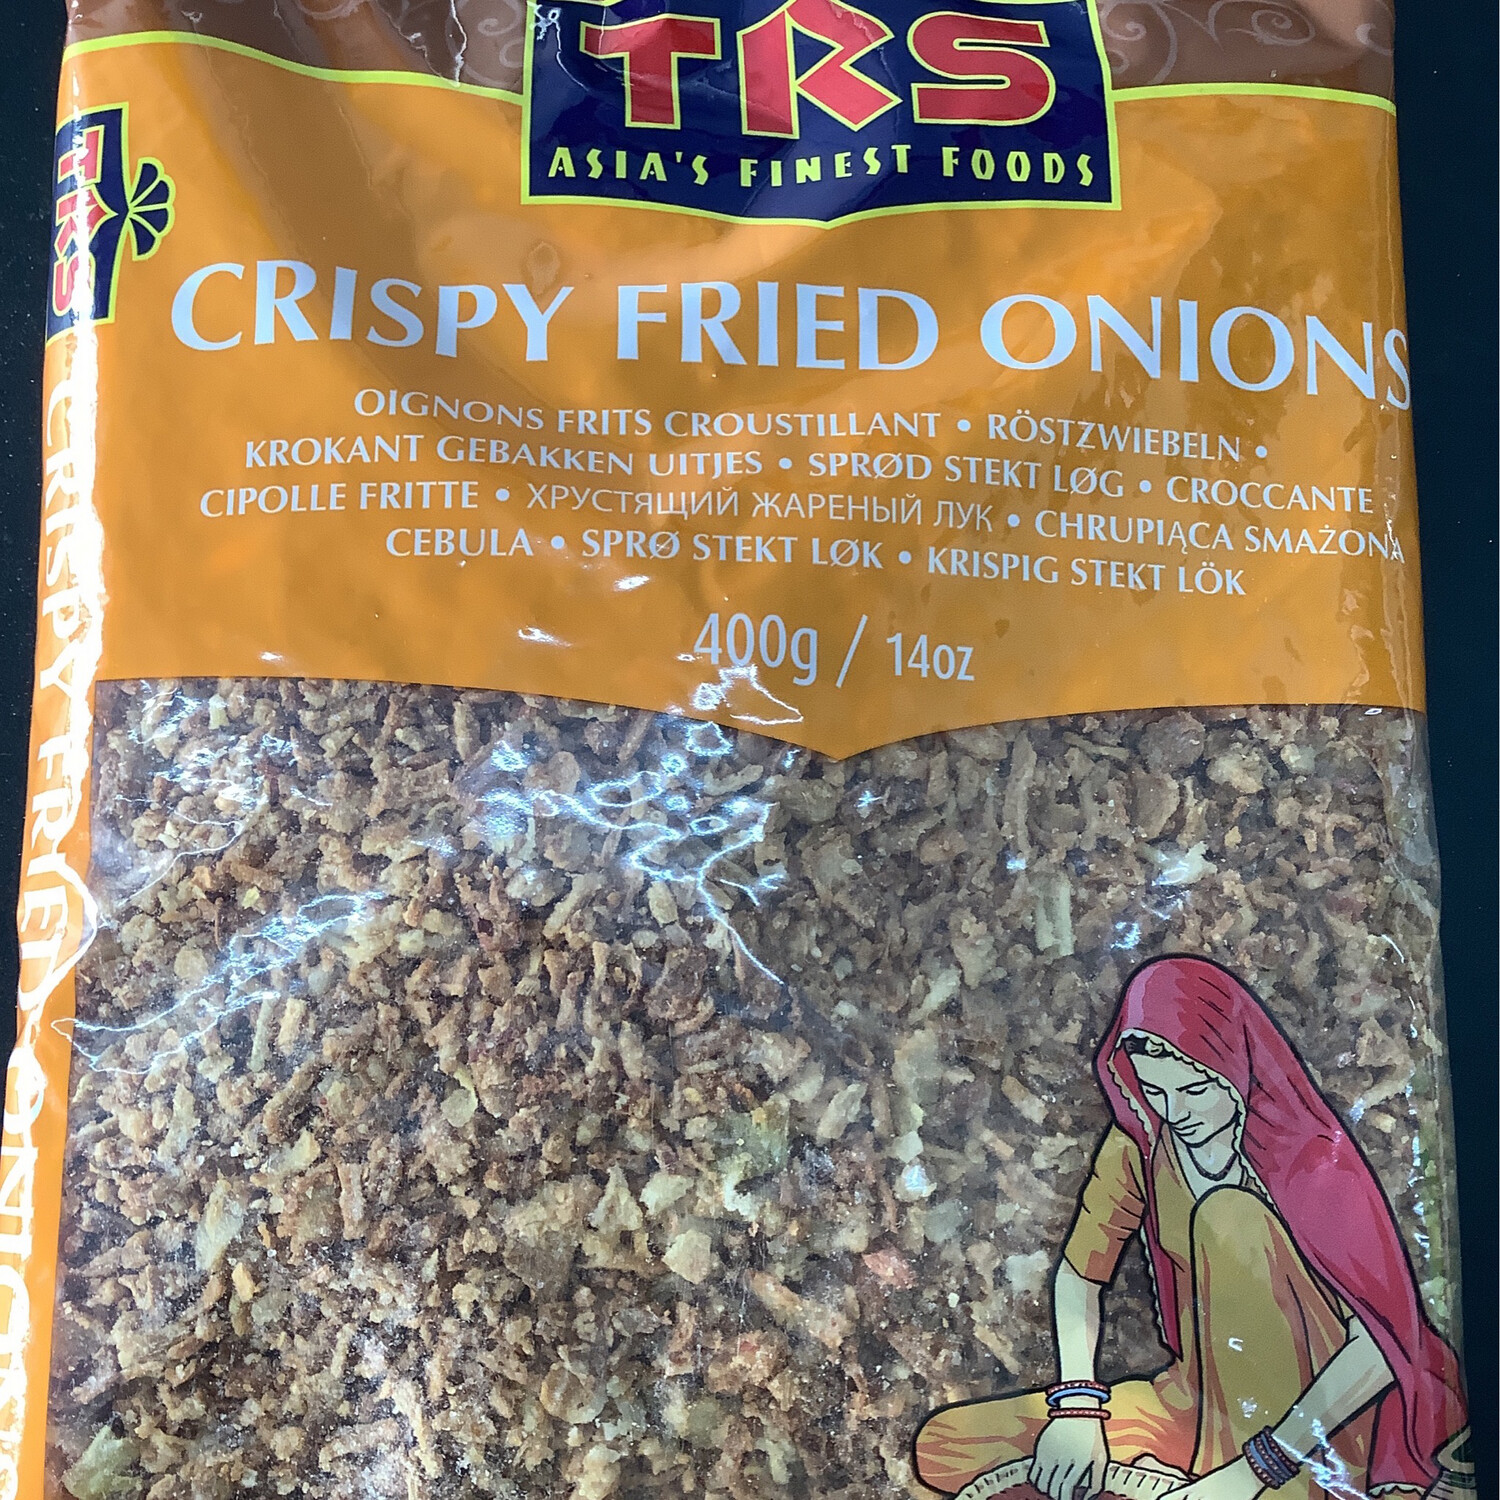 TRS Crispy Fried Onions 400g